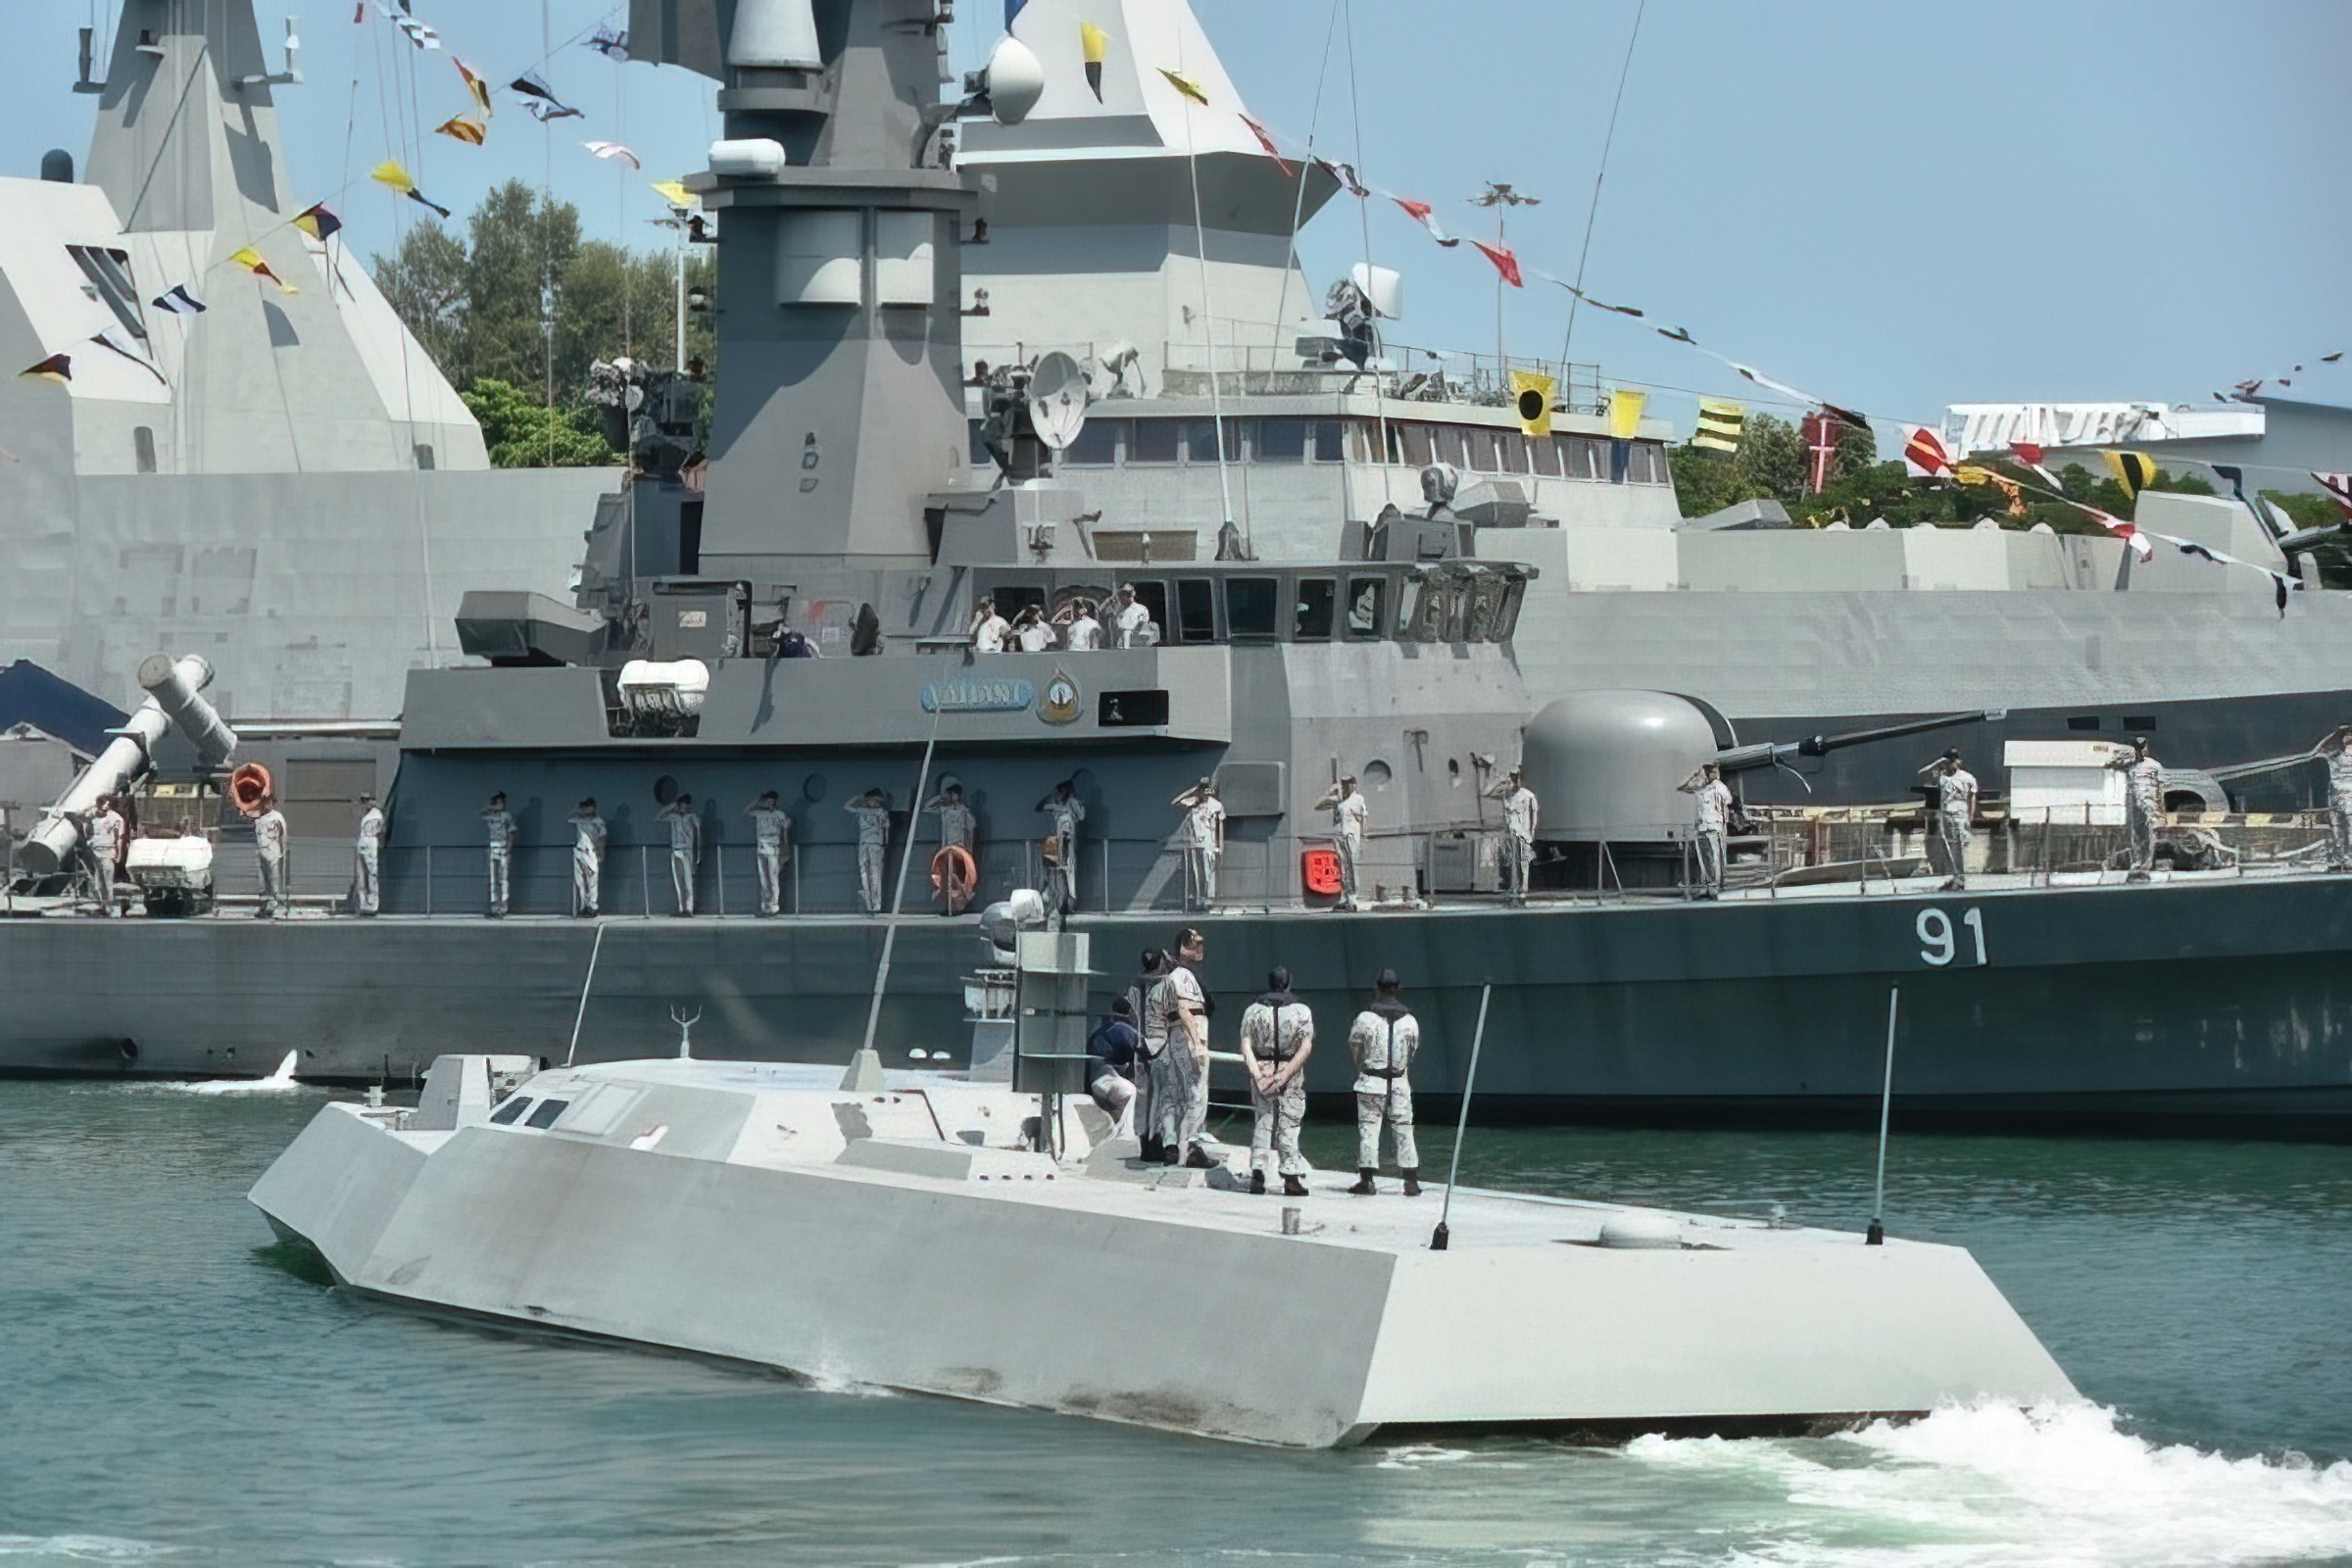 The Singapore Navy’s Specialised Marine Craft (SMC